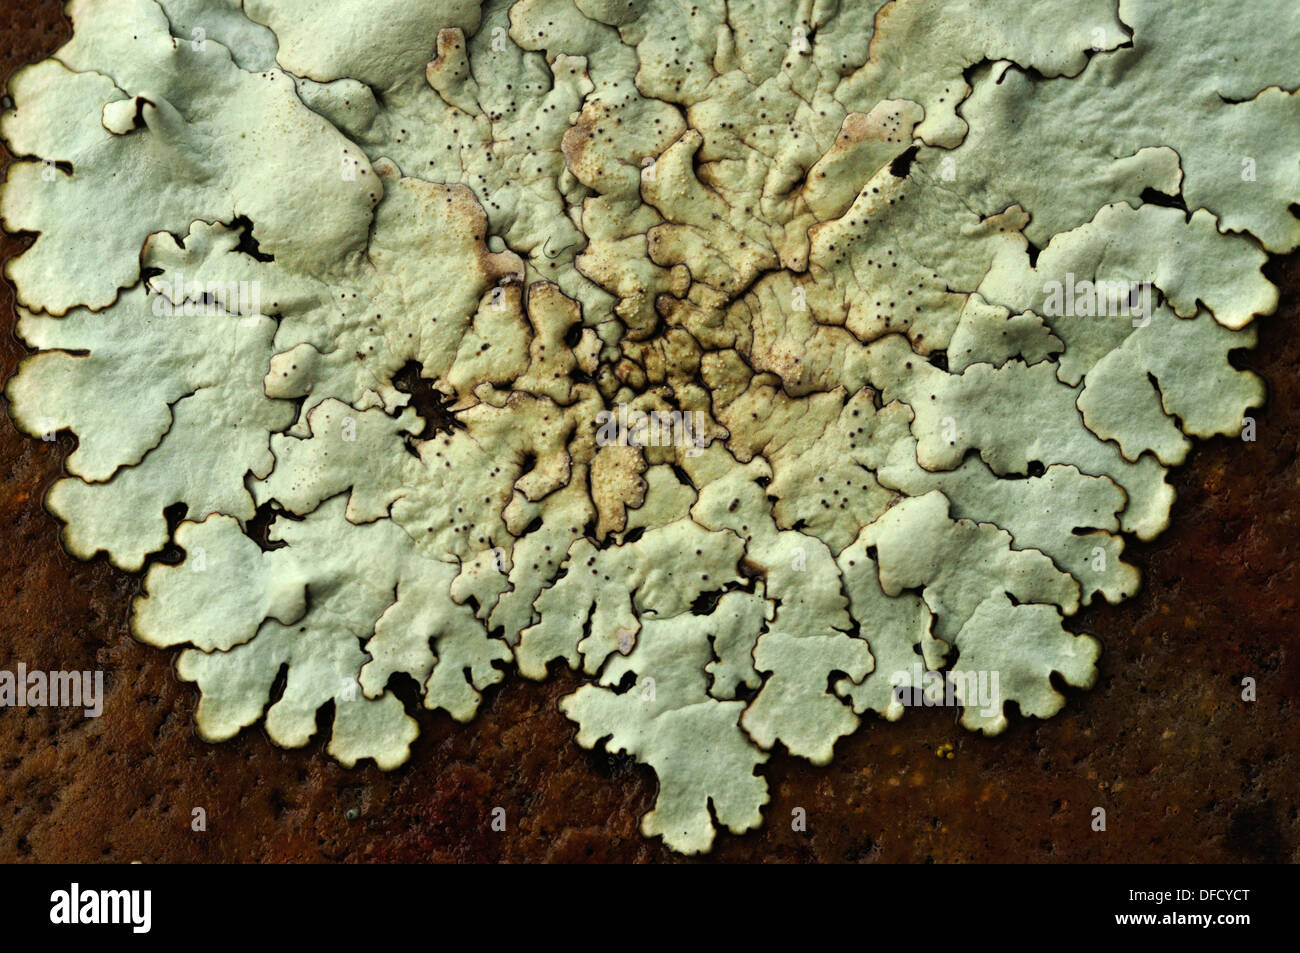 Lichens covering a stone Stock Photo